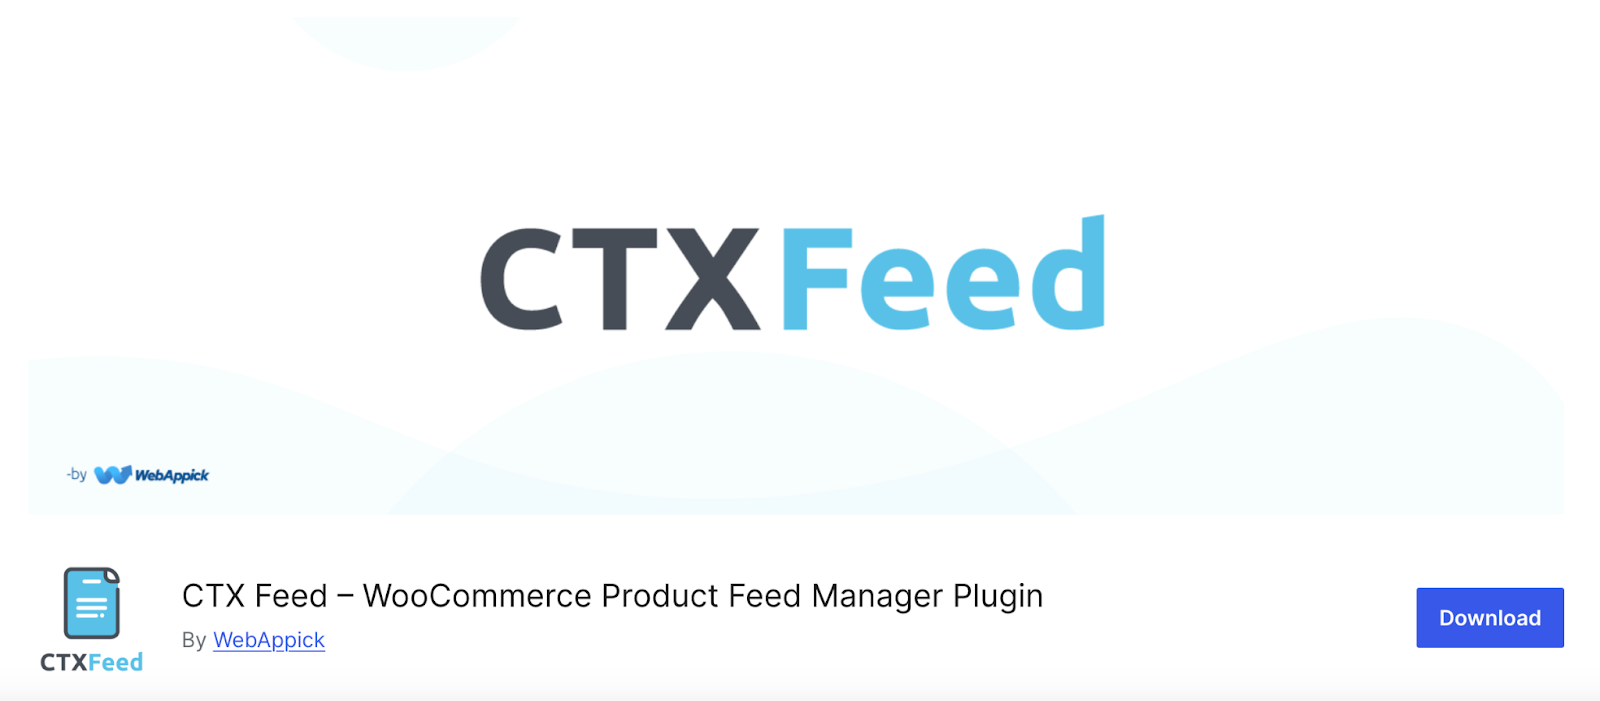 Why CTX Feed?